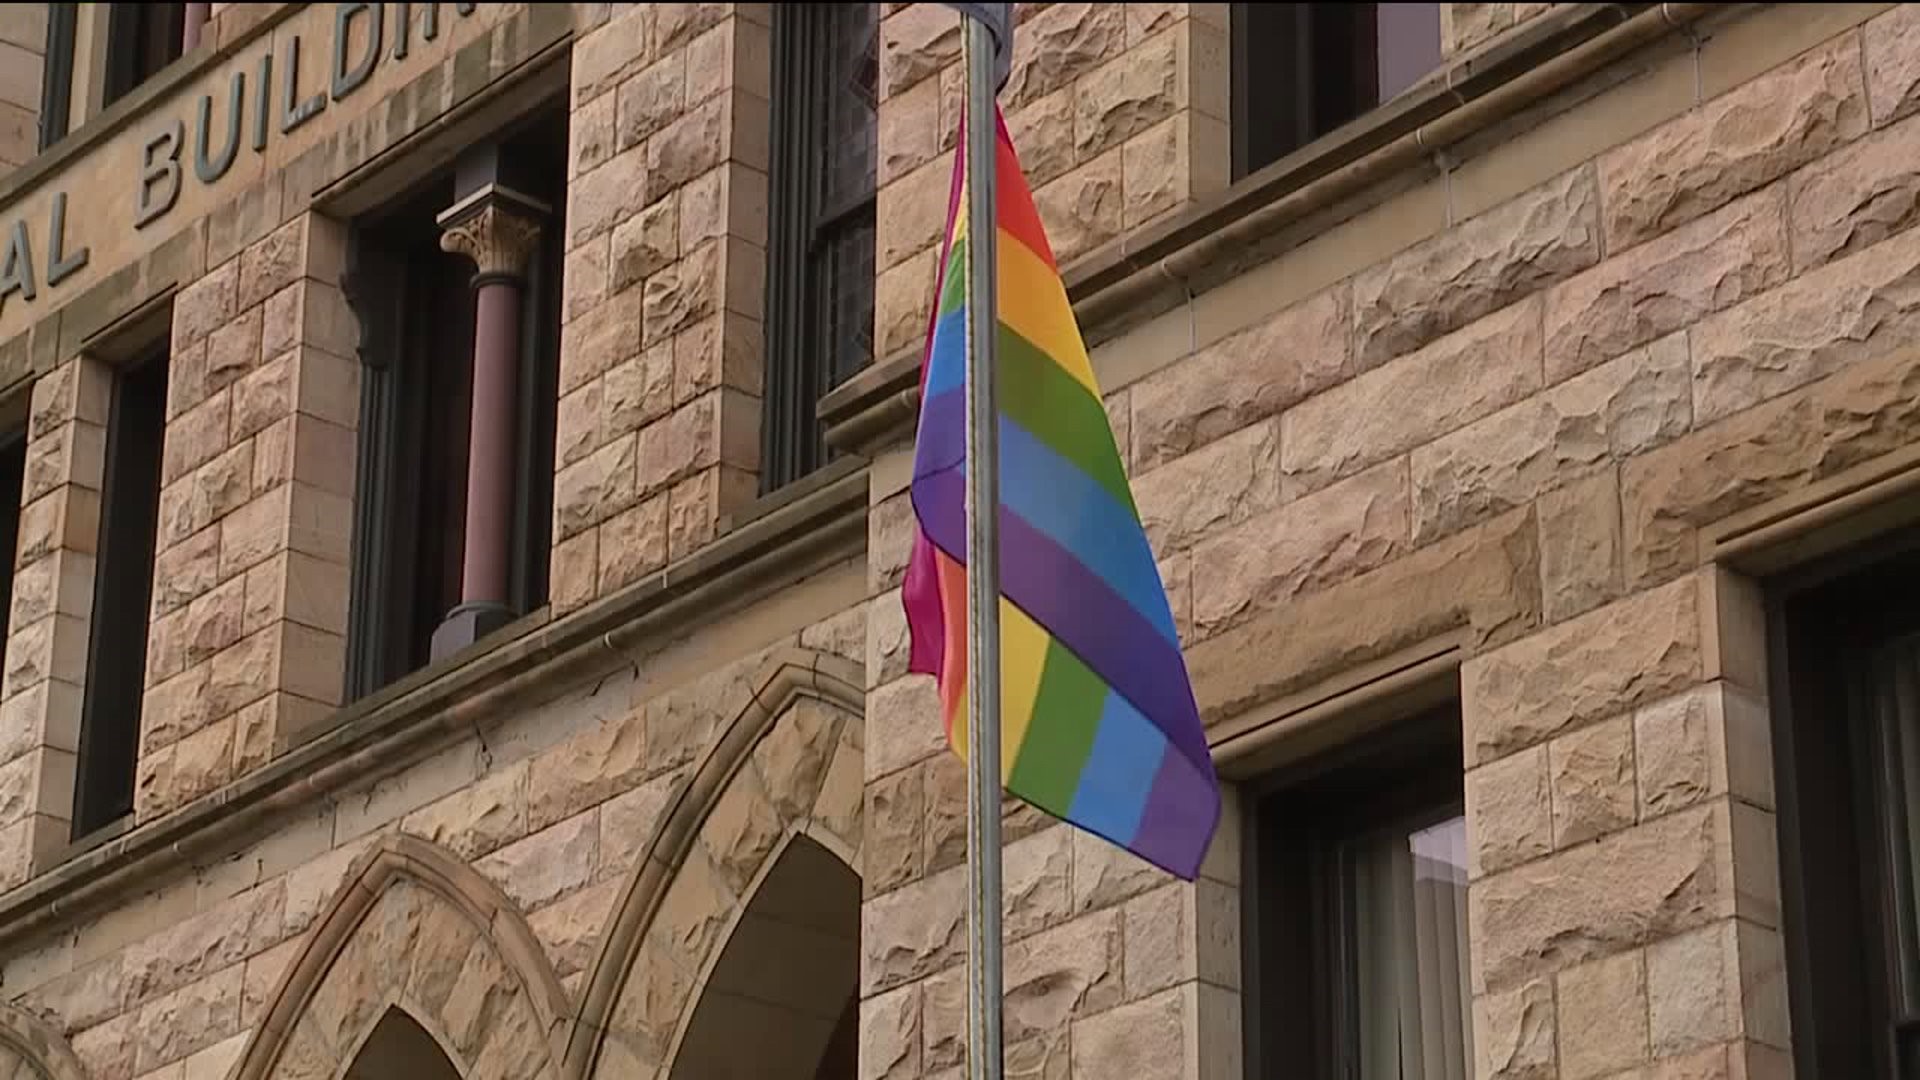 Mixed Feelings about Pride Flag in Scranton